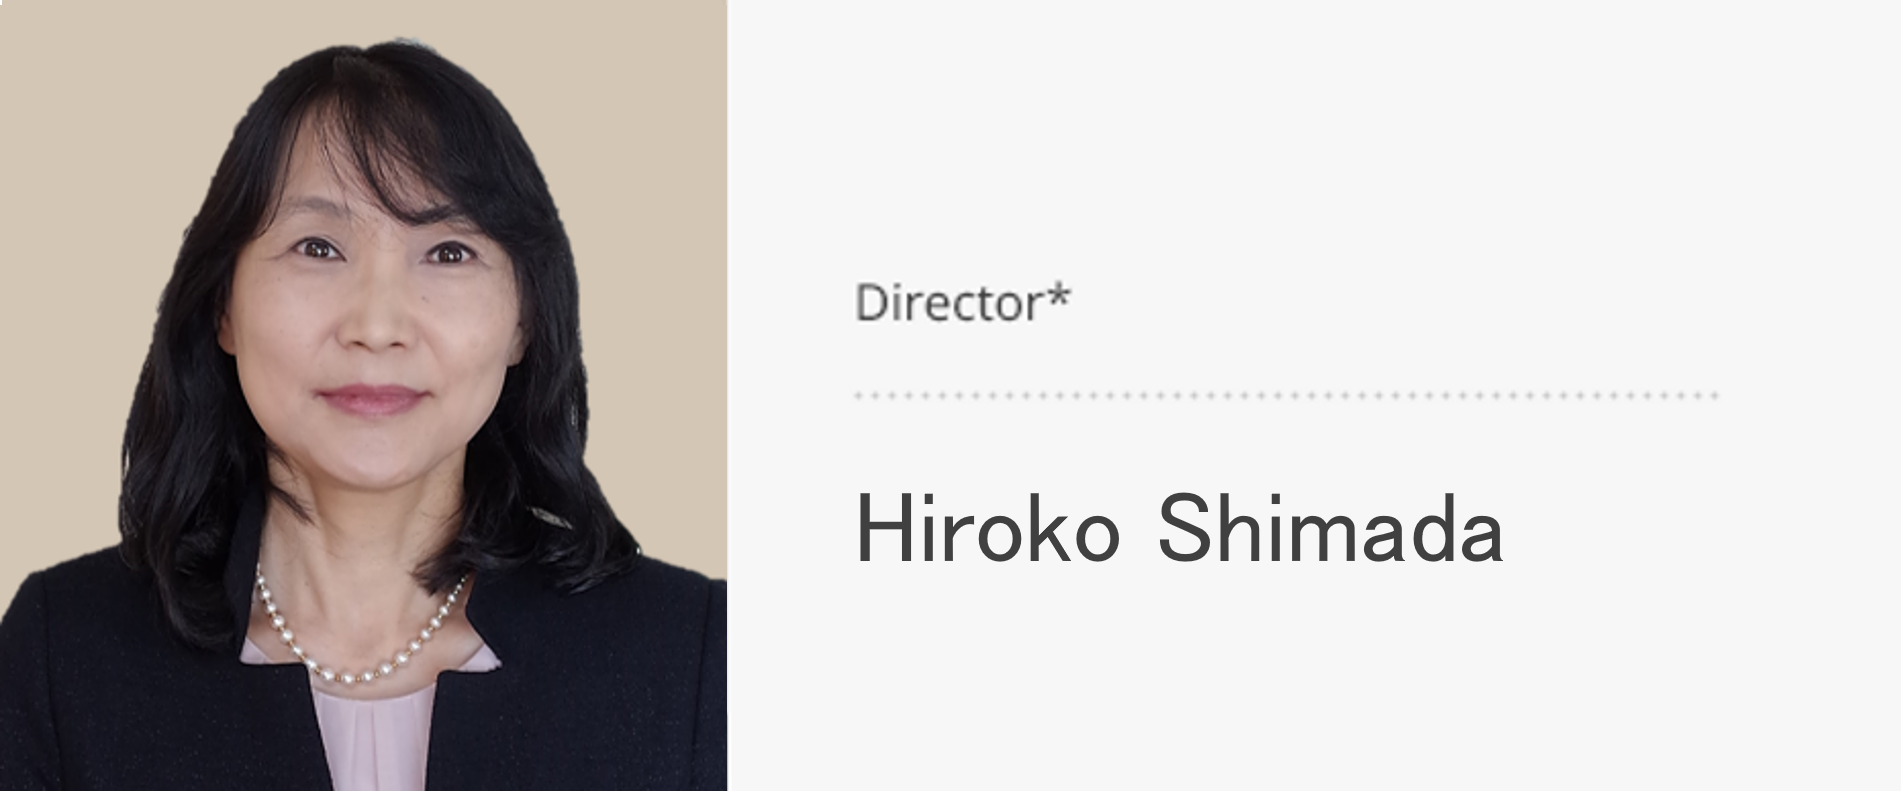 Director* Hiroko Shimada